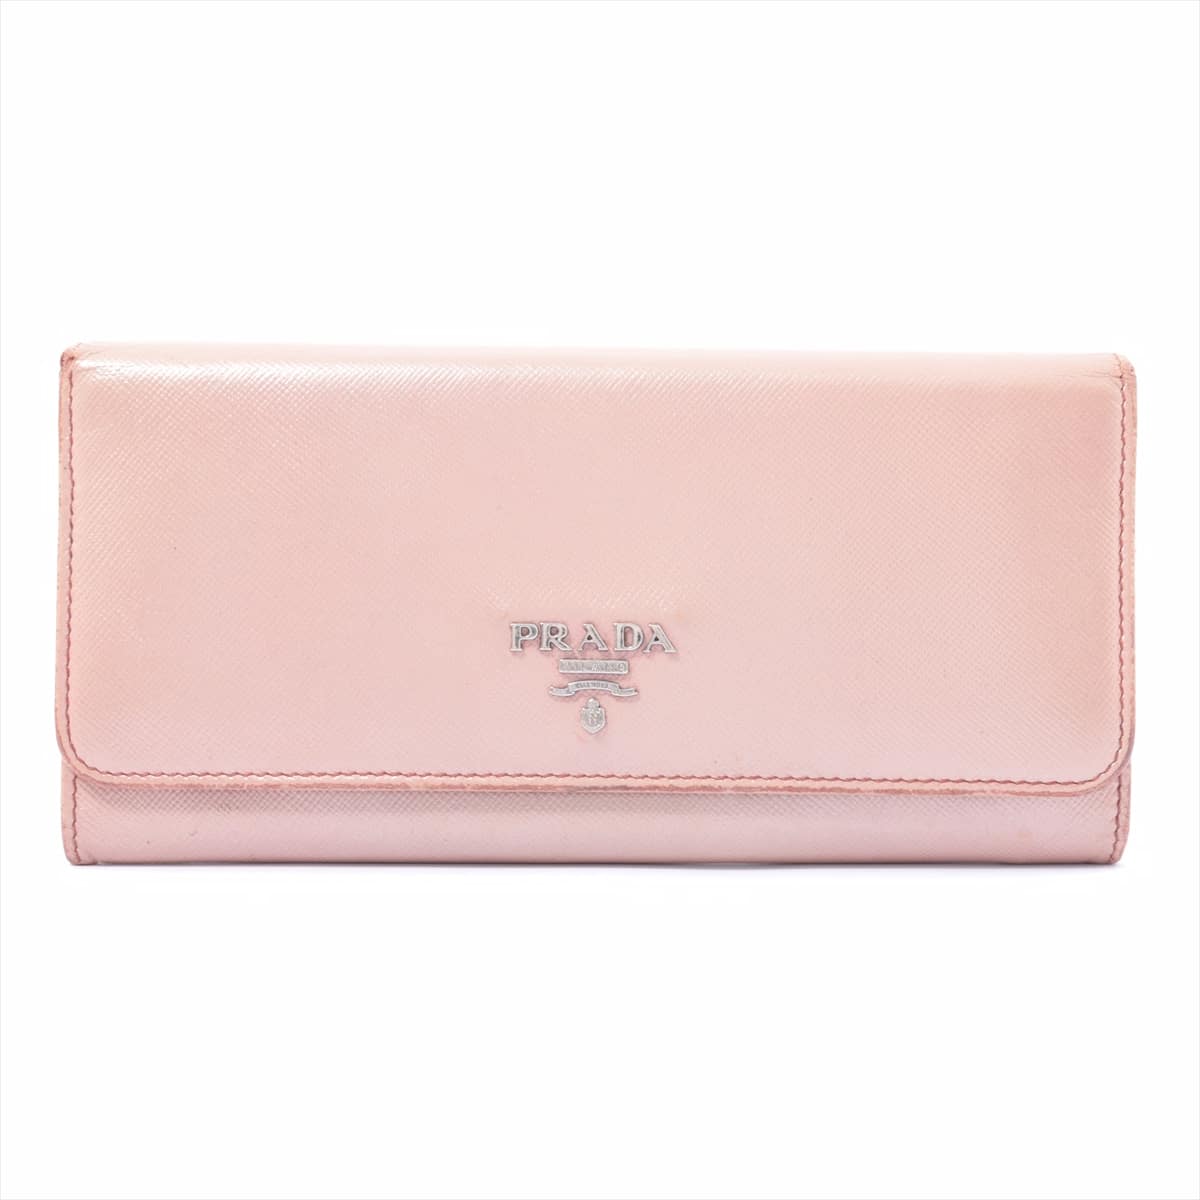 Prada Saffiano 1M1132 Leather Wallet Pink Gold